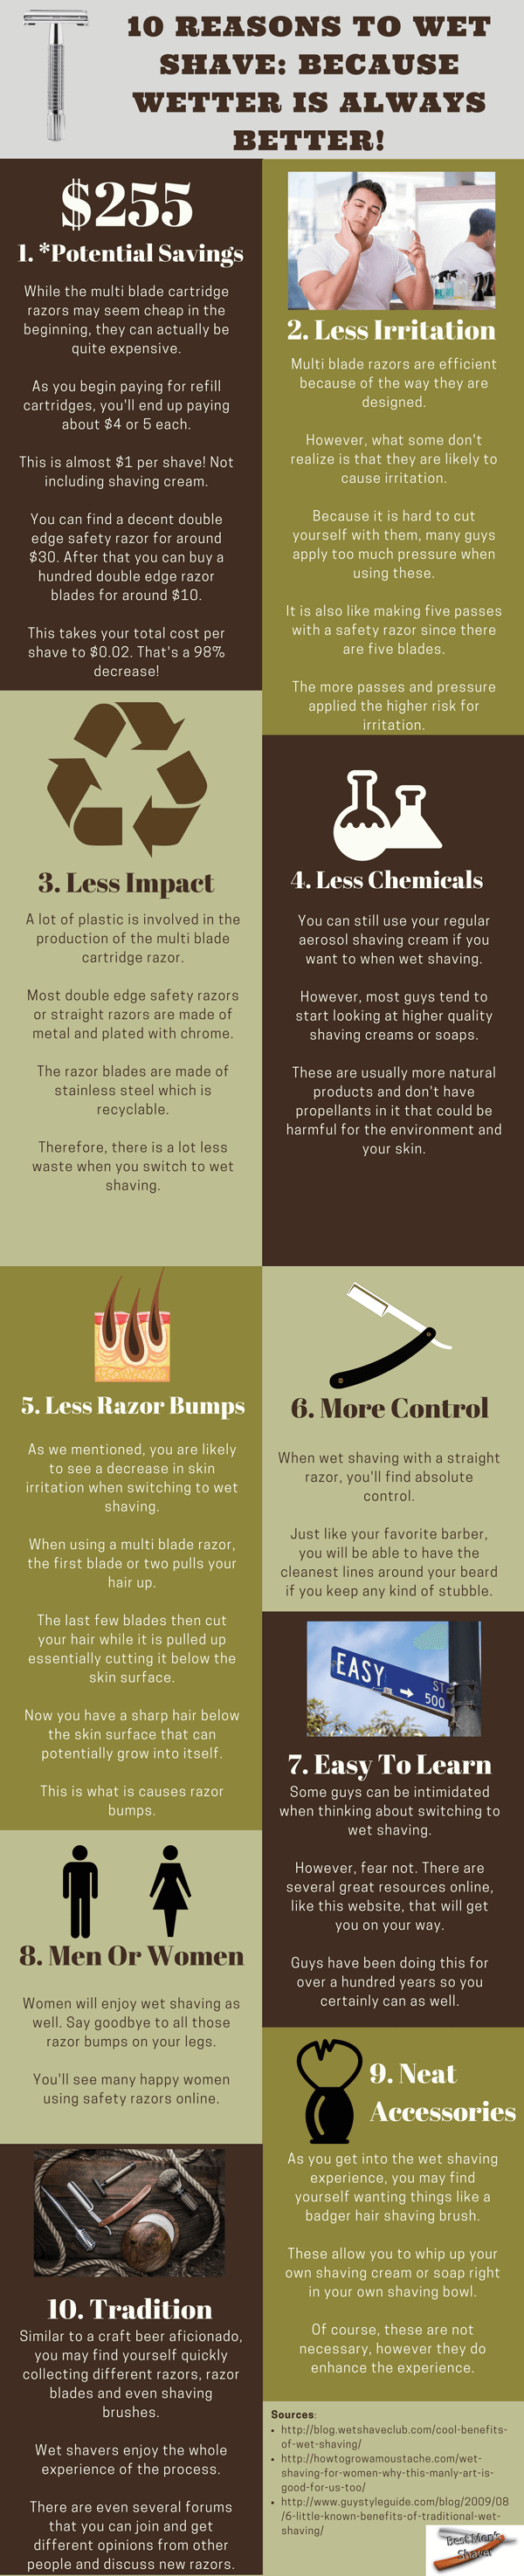 10-Reasons-To-Start-Wet-Shaving-infographic-plaza